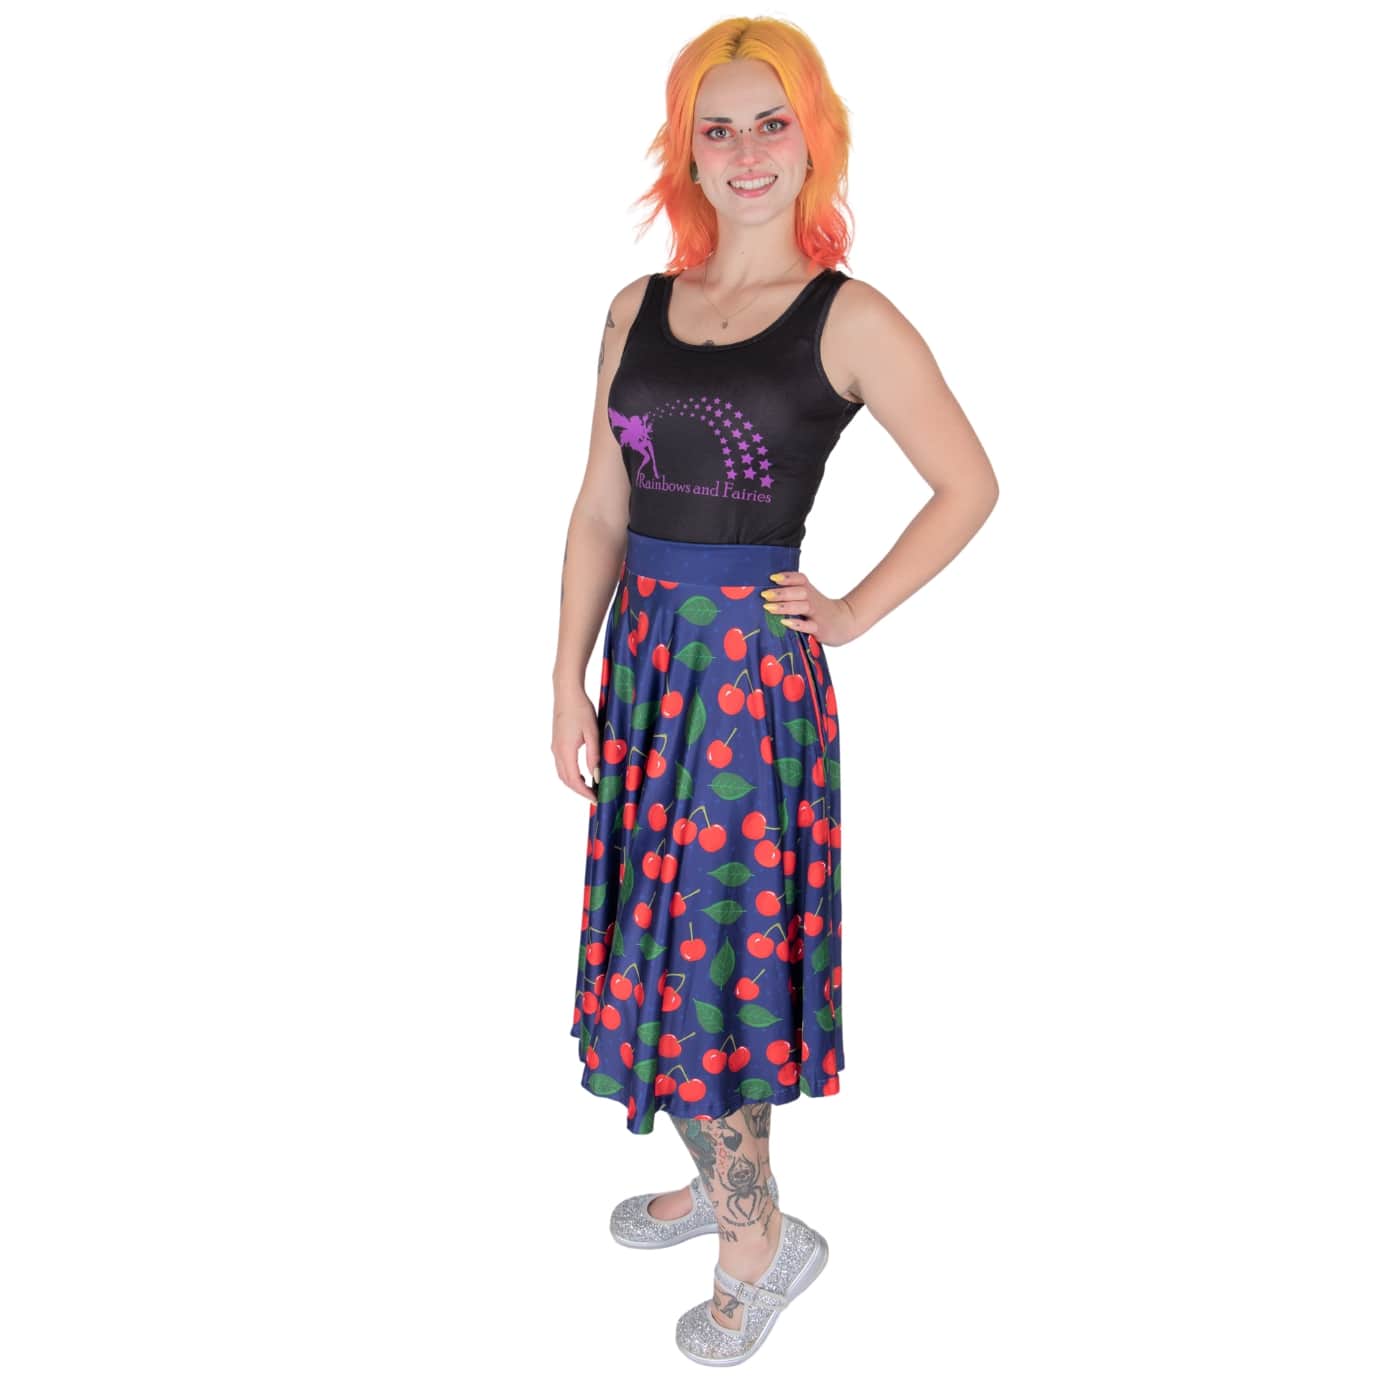 Cherry Swishy Skirt by RainbowsAndFairies.com.au (Cherries - Cherry Print - Rockabilly - Circle Skirt - Skirt With Pockets - Kitsch - Vintage Inspired) - SKU: CL_SWISH_CHERR_ORG - Pic-04